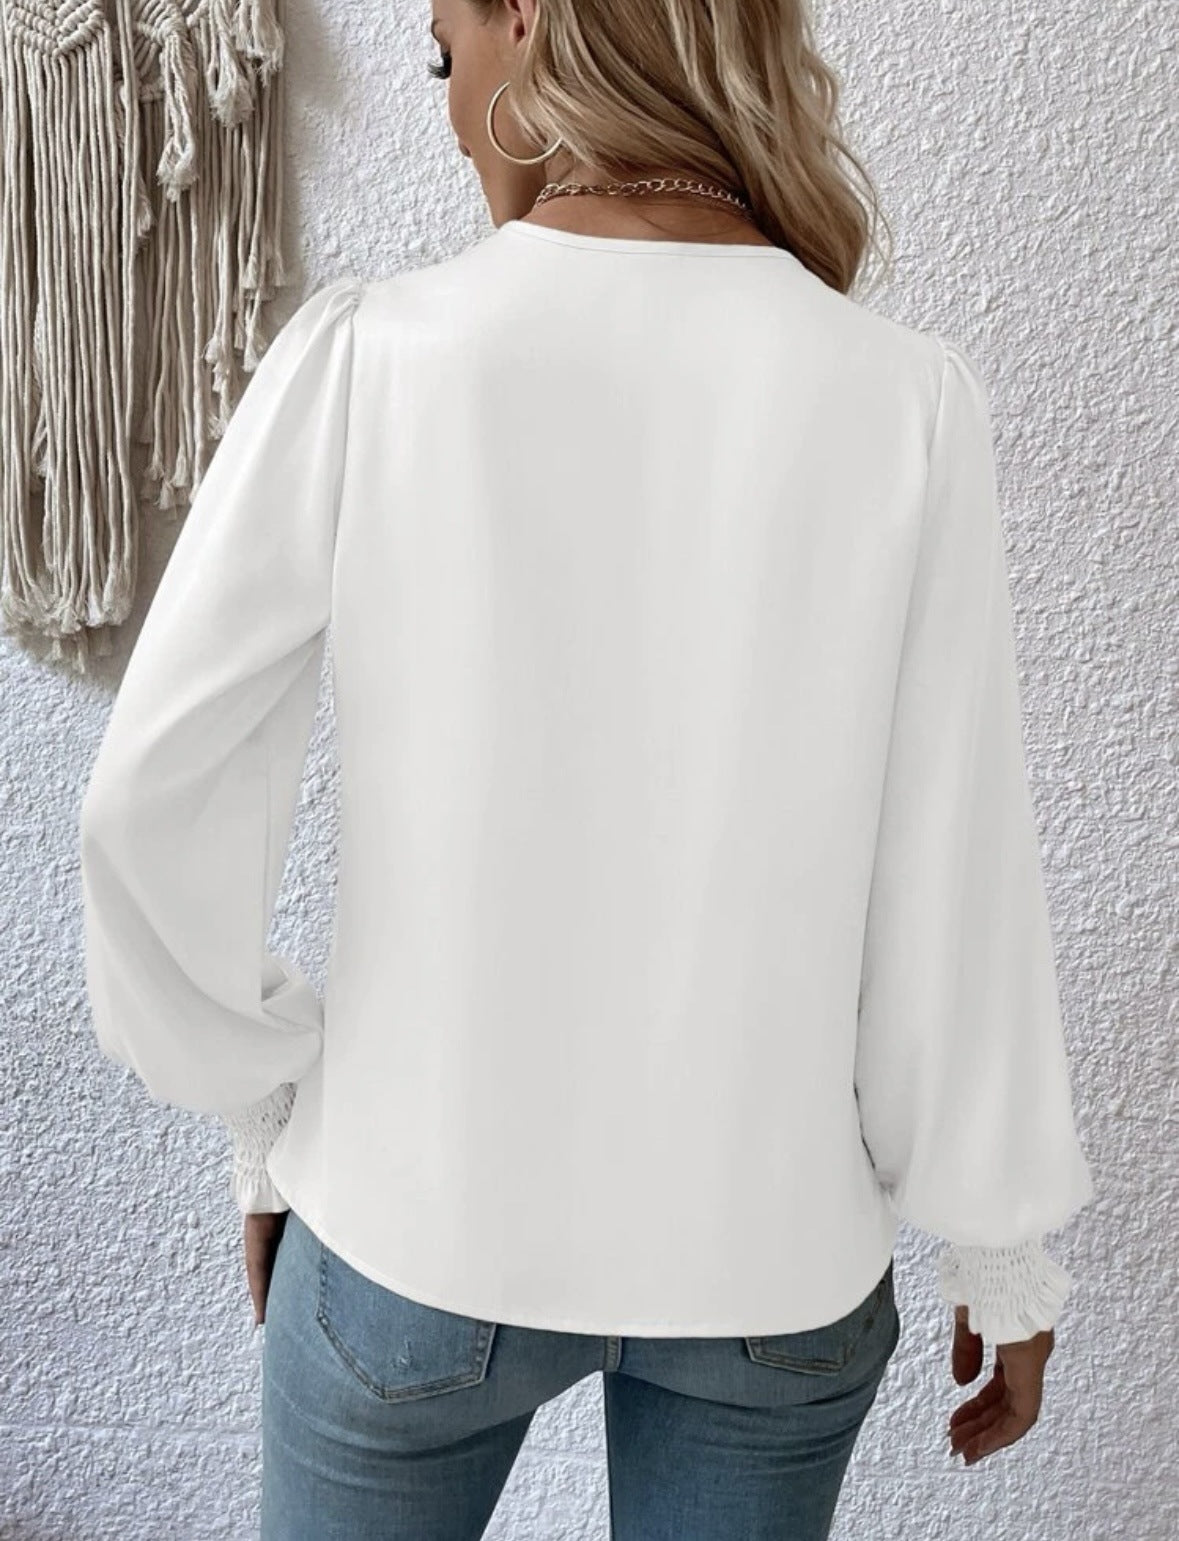 Elegant Women's V-Neck Shirt with Lantern Sleeve Style